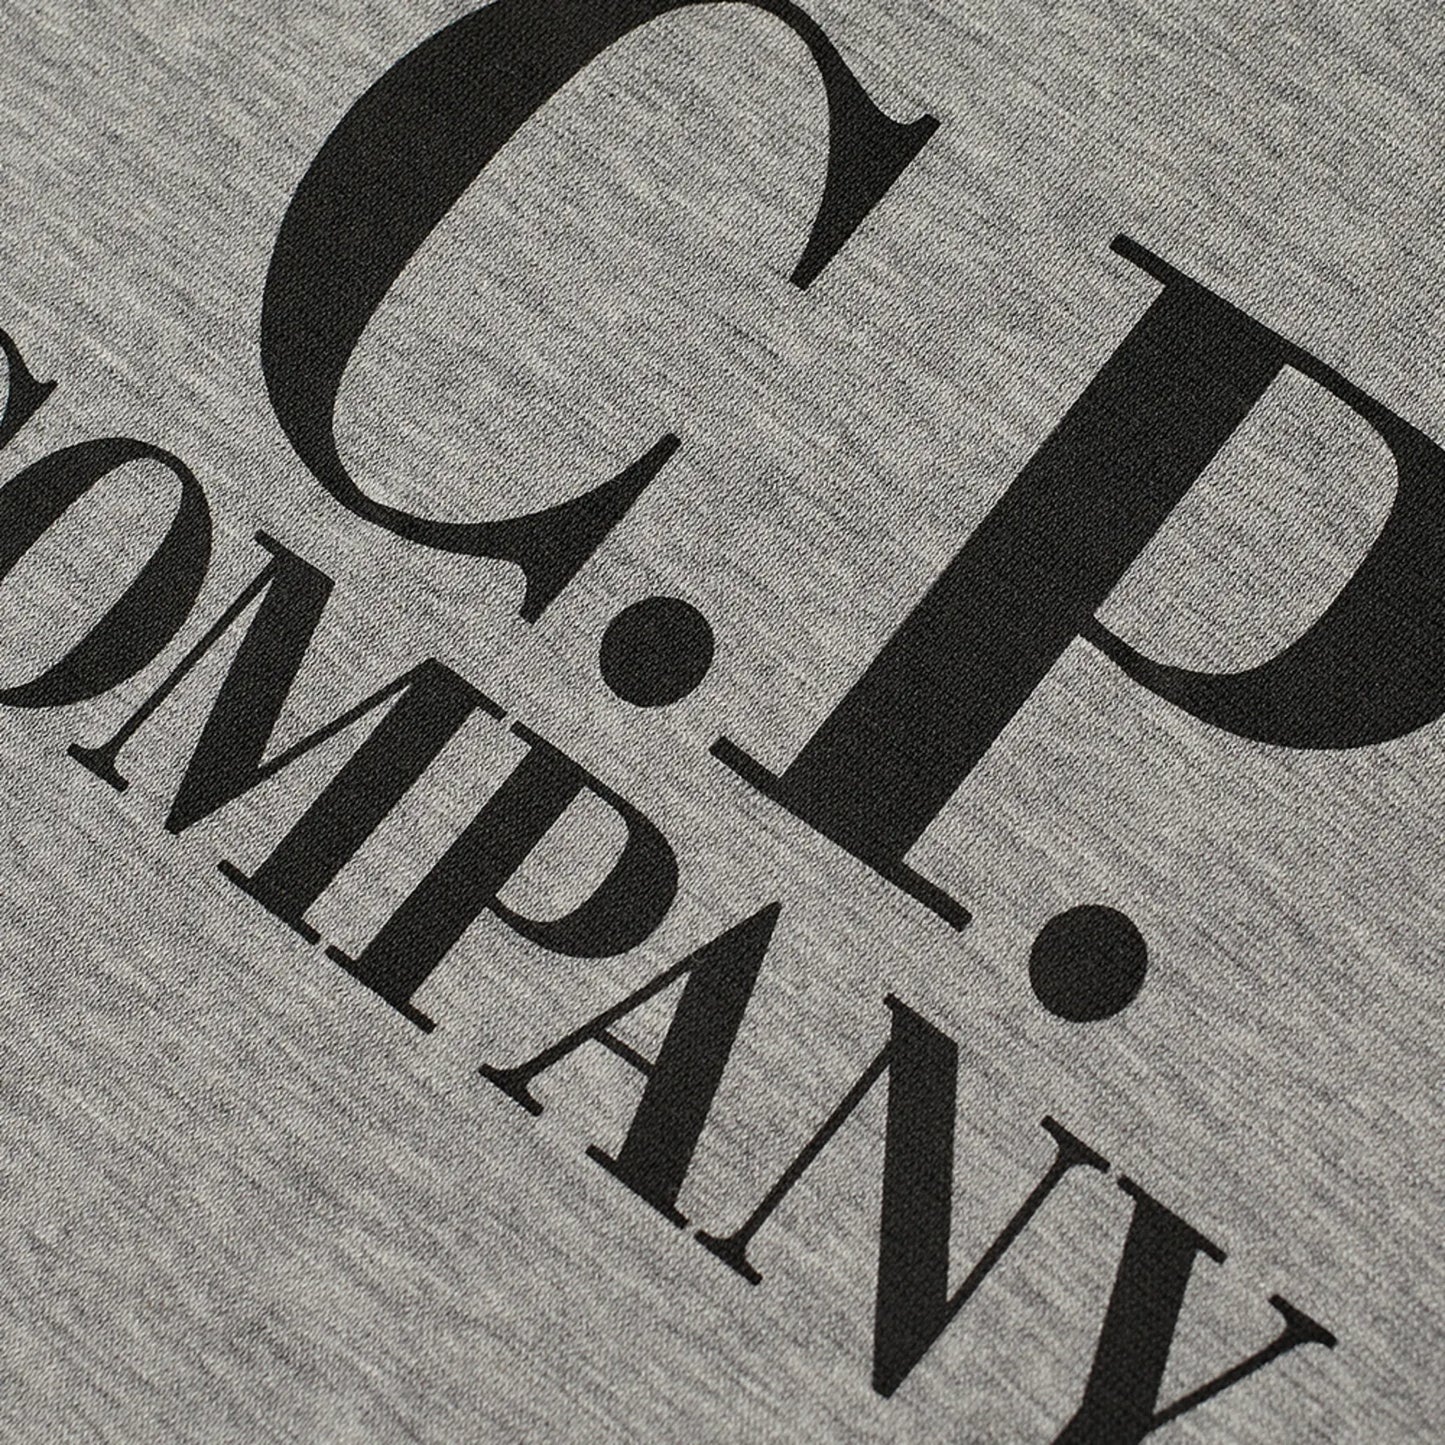 Kids CP Company Goggle T-Shirt - DANYOUNGUK